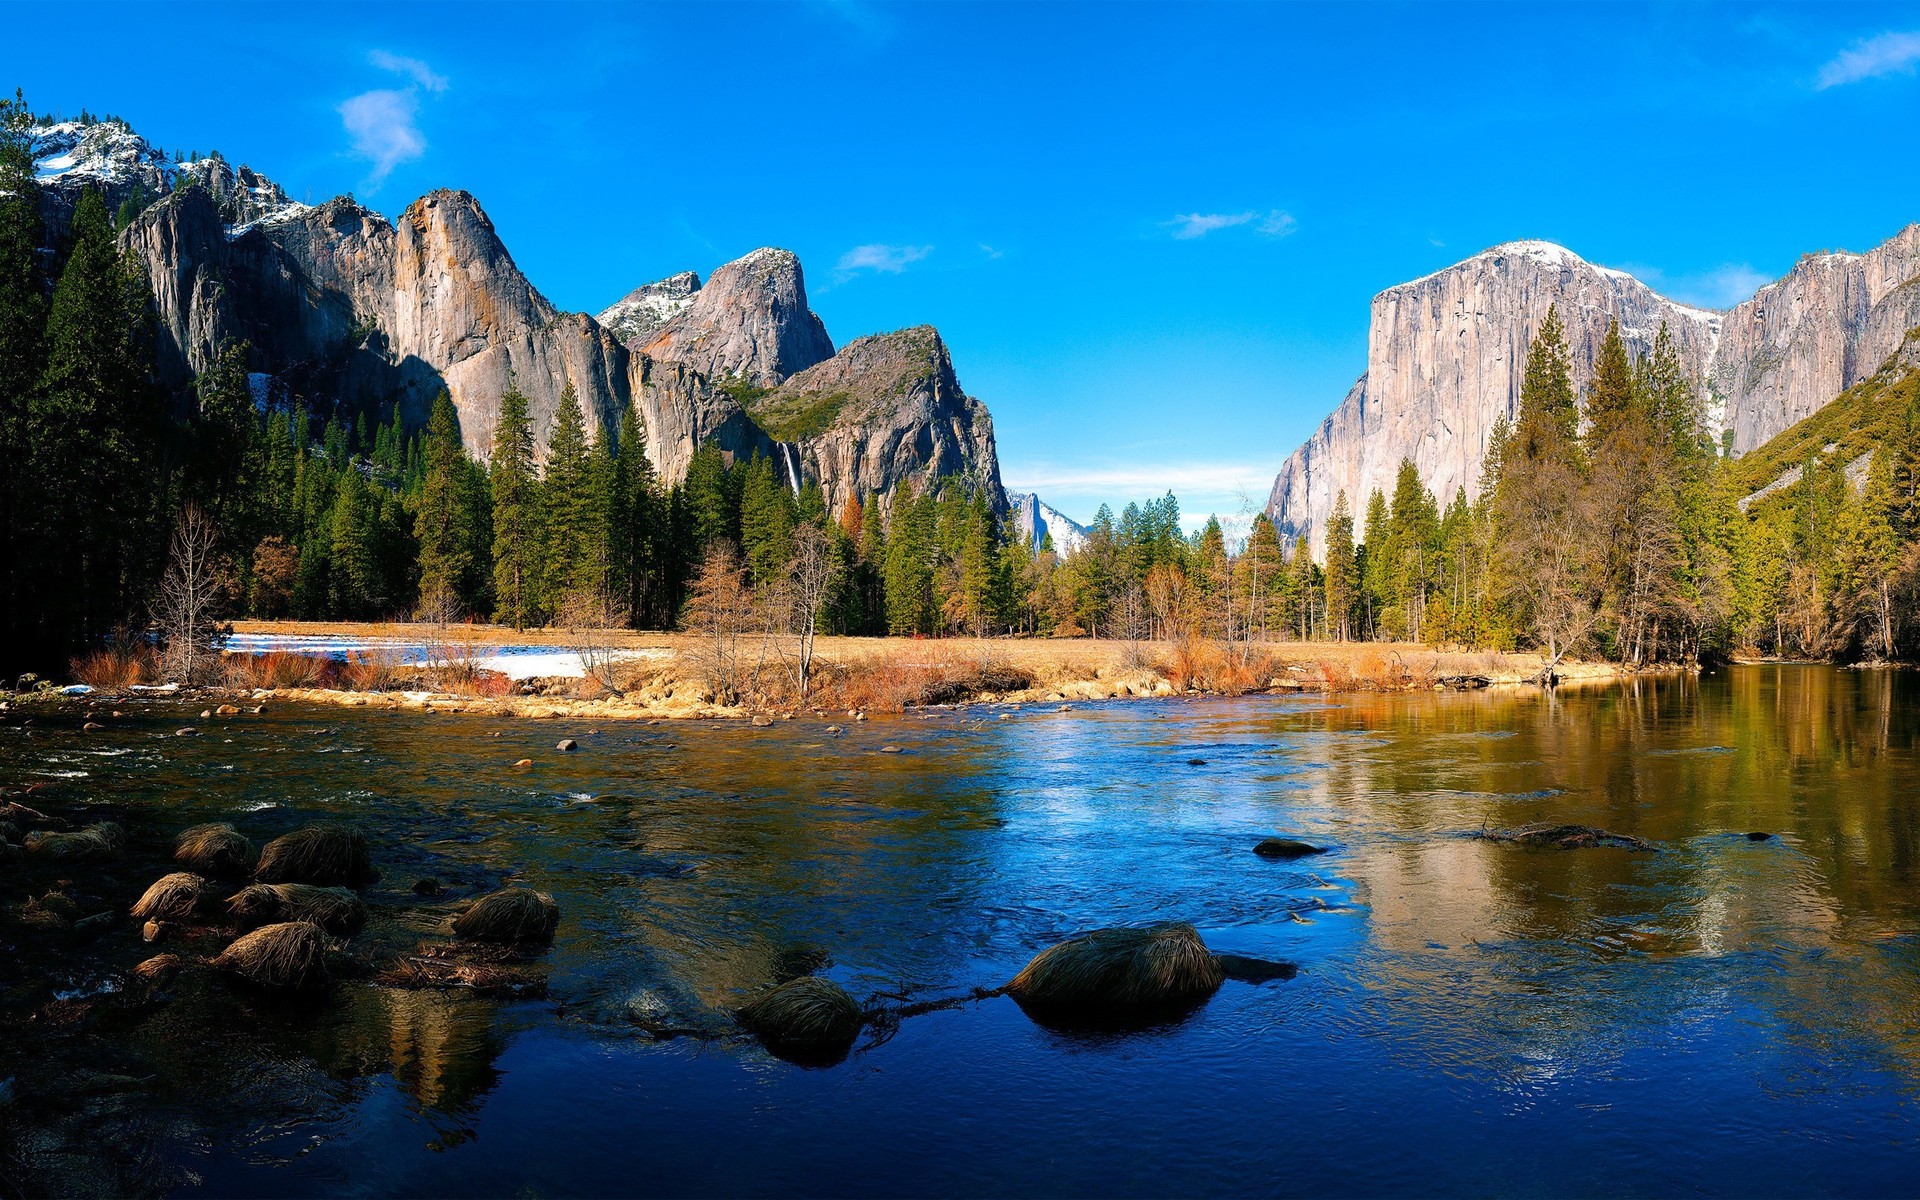 Yosemite Valley Wallpaper